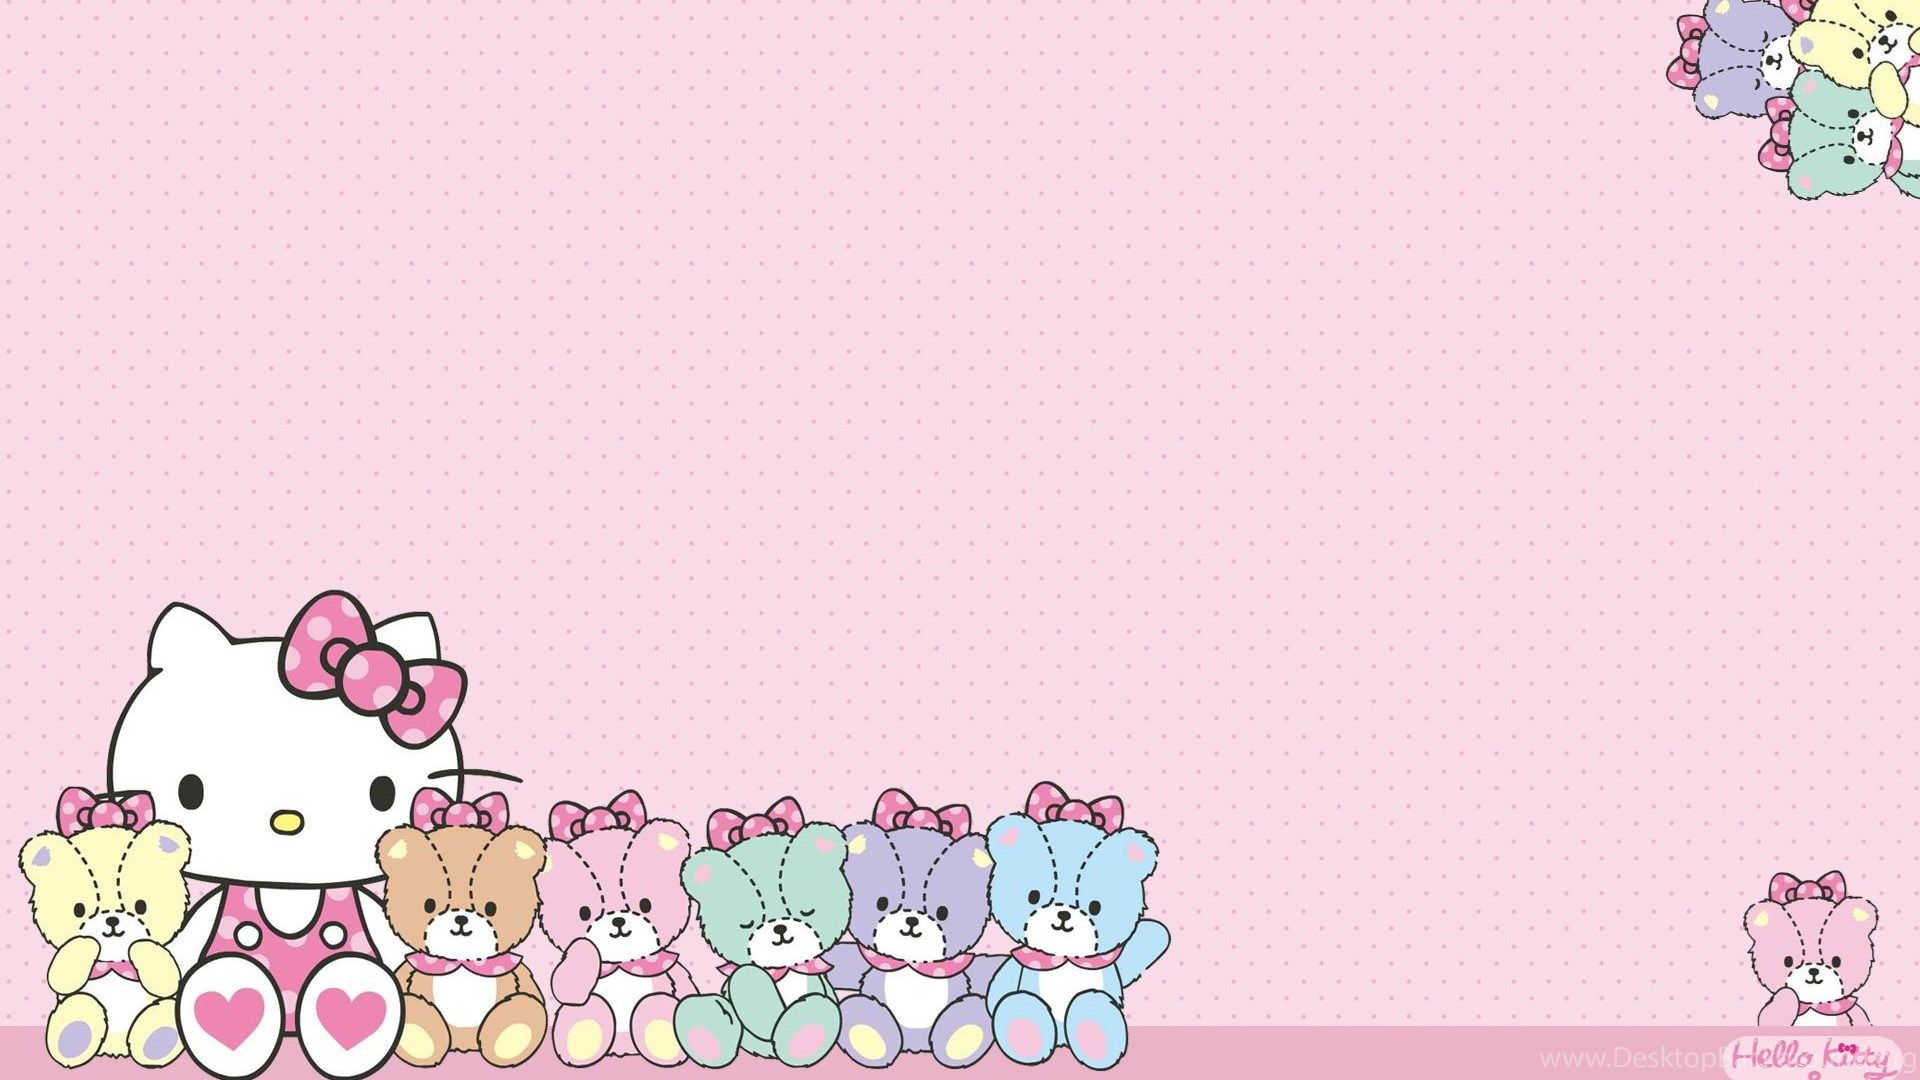 Sanrio Hello Kitty Desktop Wallpaper Image Desktop Background